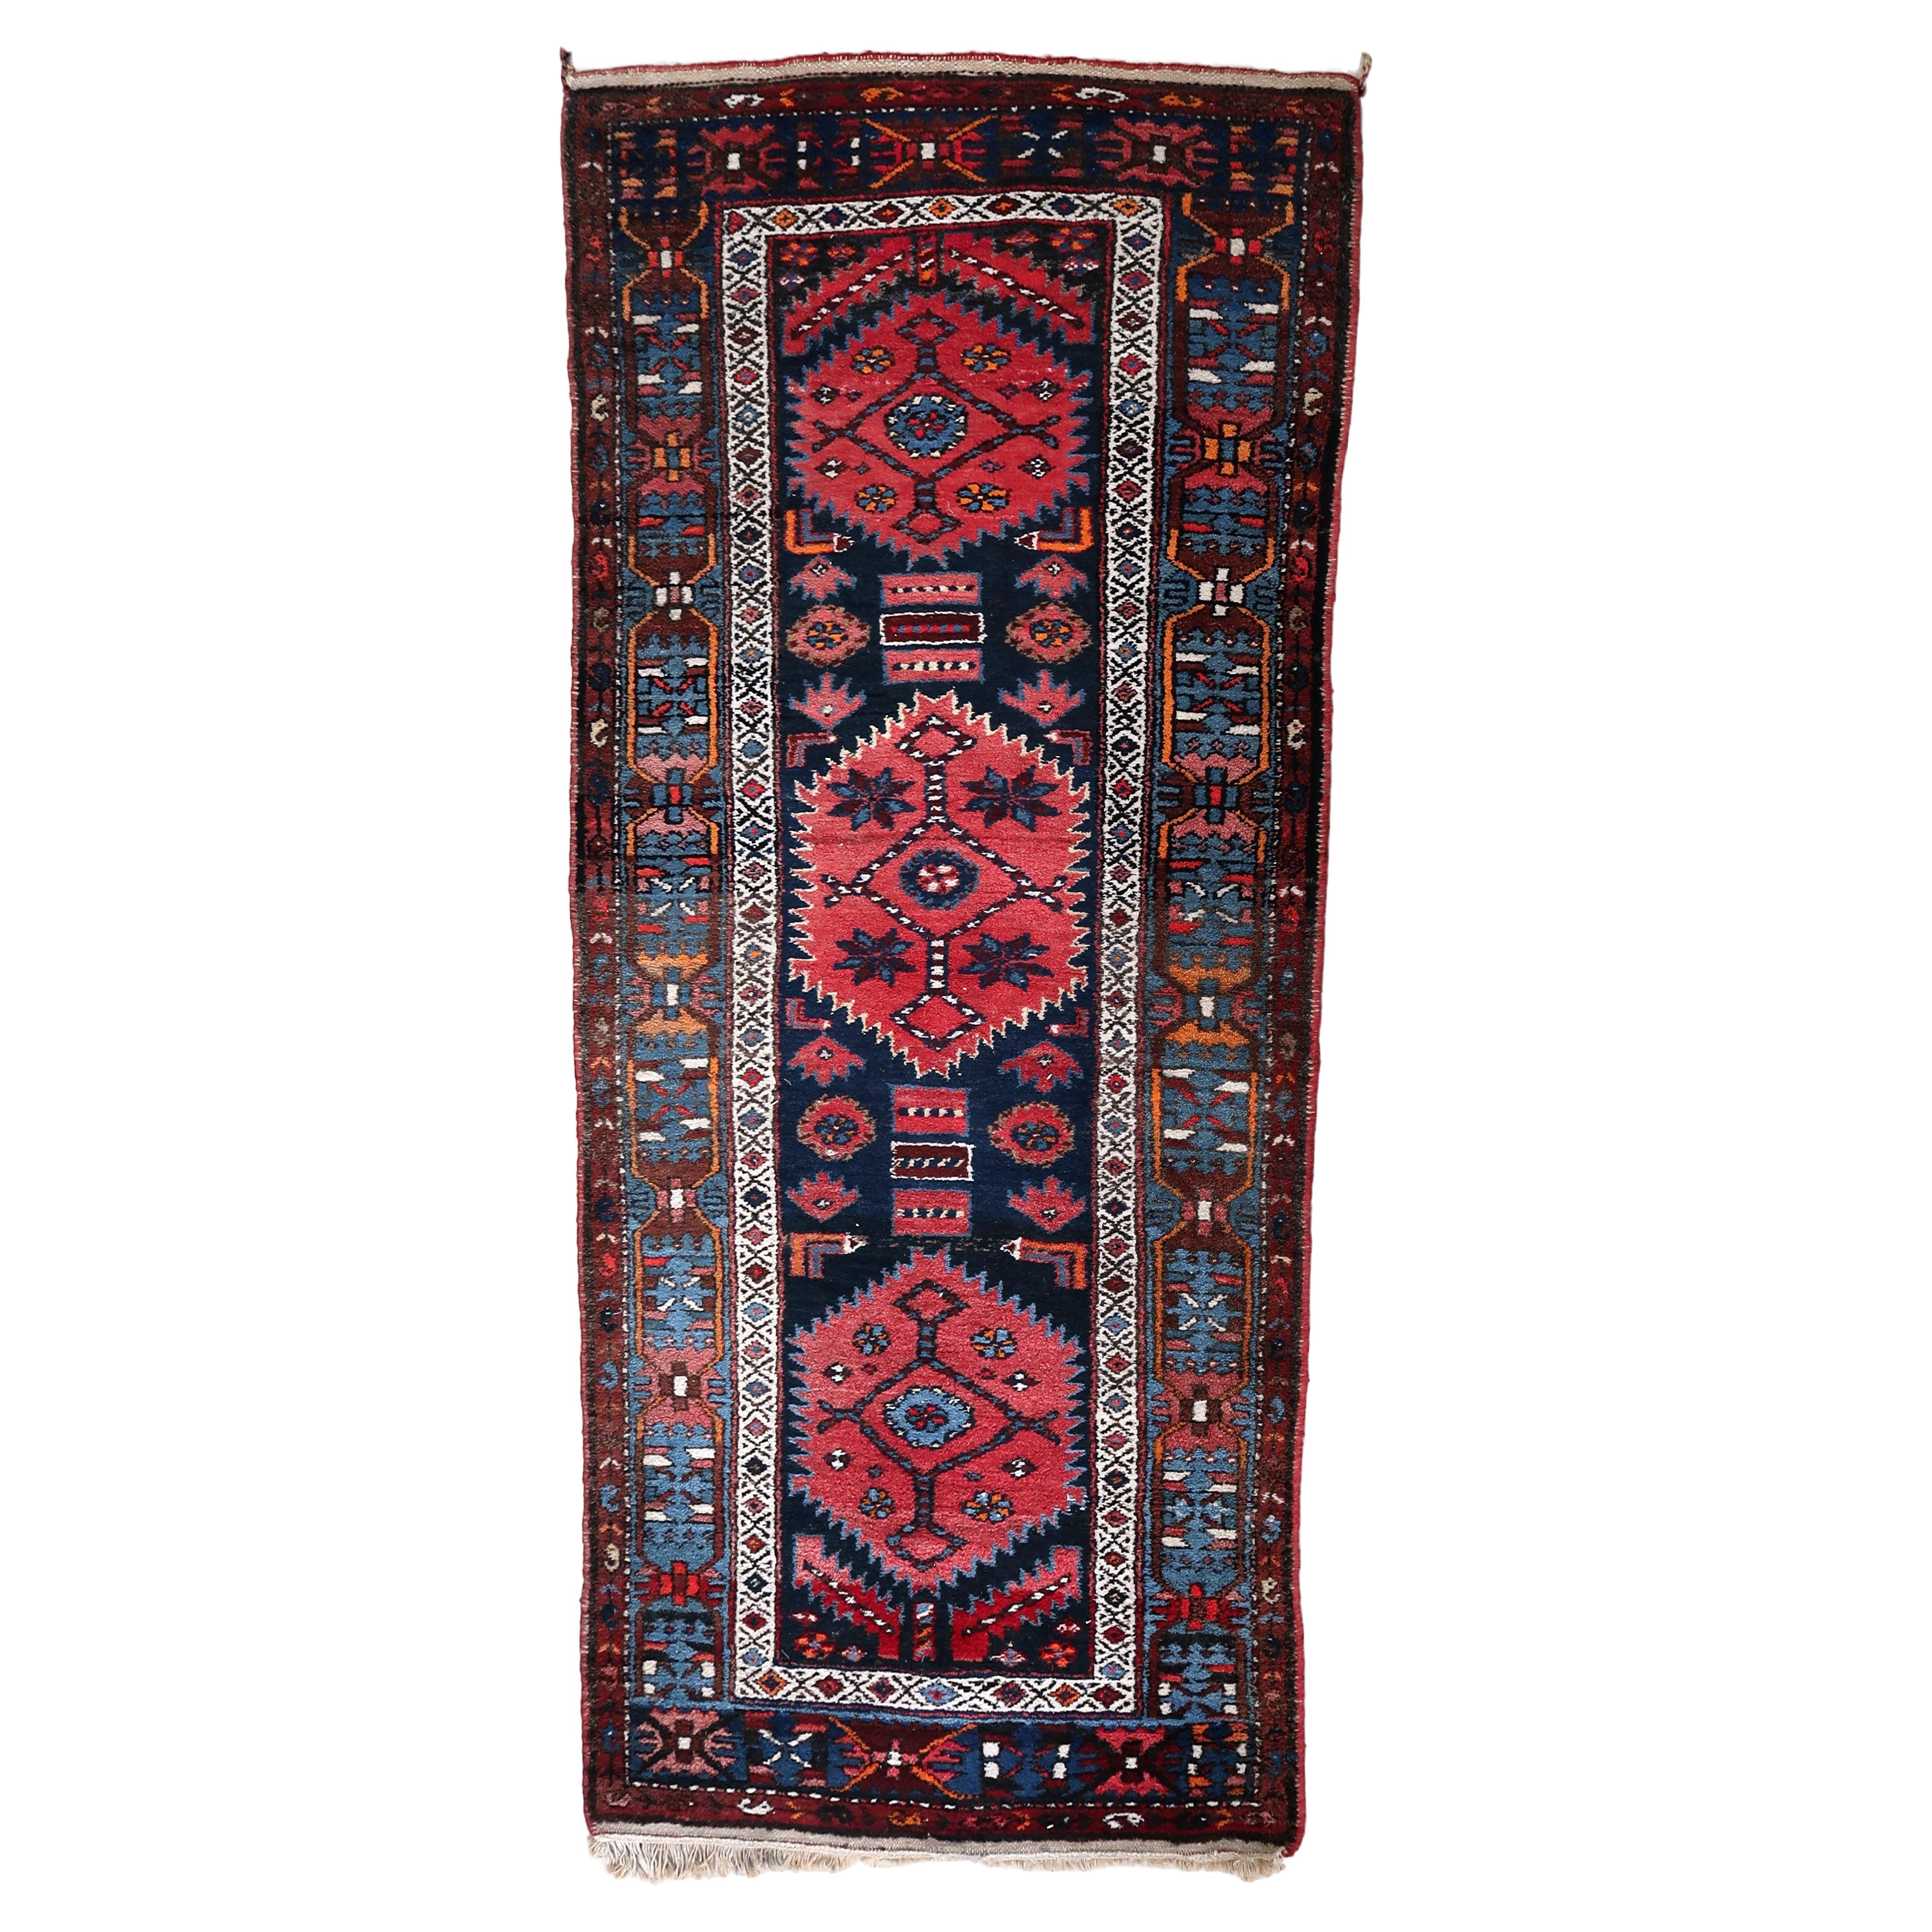 Handmade Antique Persian Style Hamadan Runner Rug 3.4' x 7.7, 1920s - 1C1104